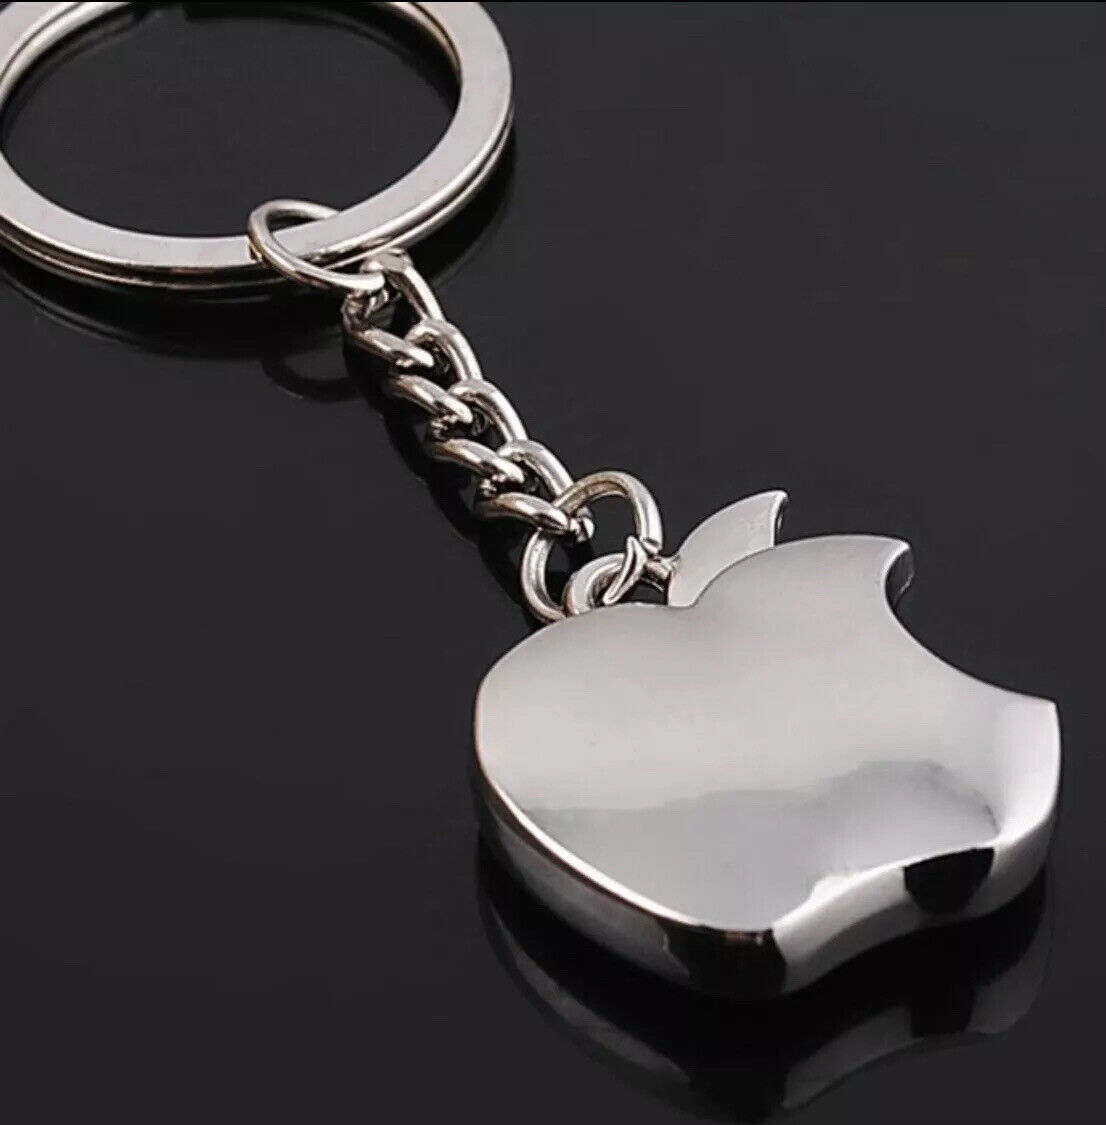 Novelty Souvenir Metal Apple Key Chain Creative Gifts Apple Keychain Key Ring 